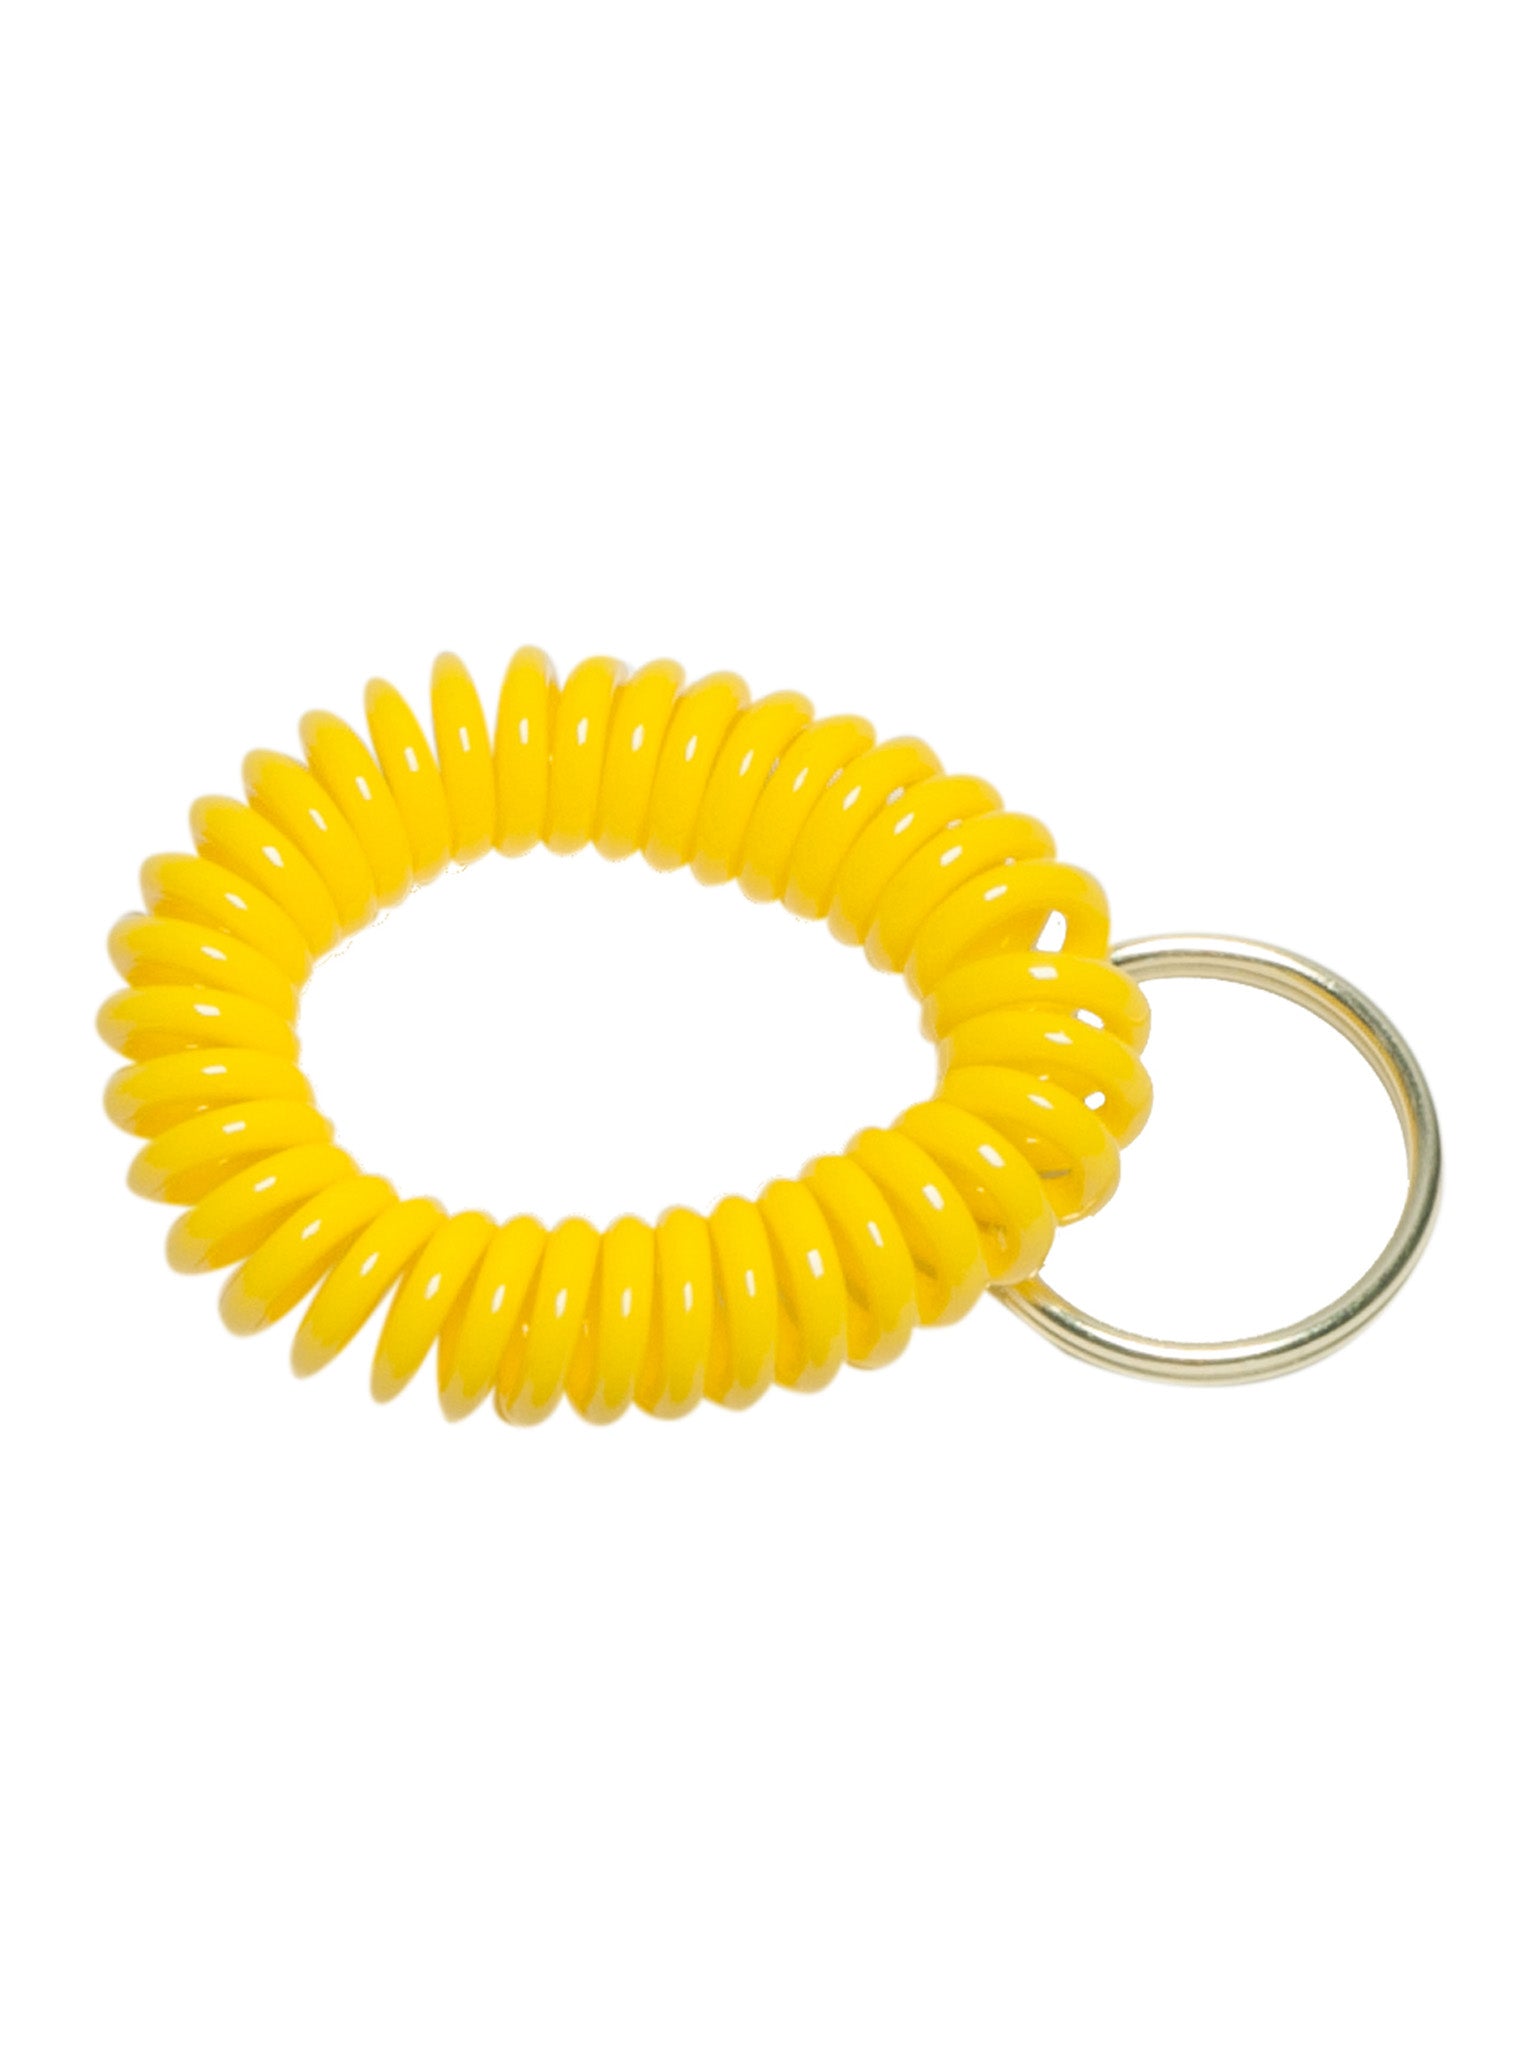 Spiral Bracelets For Whistle